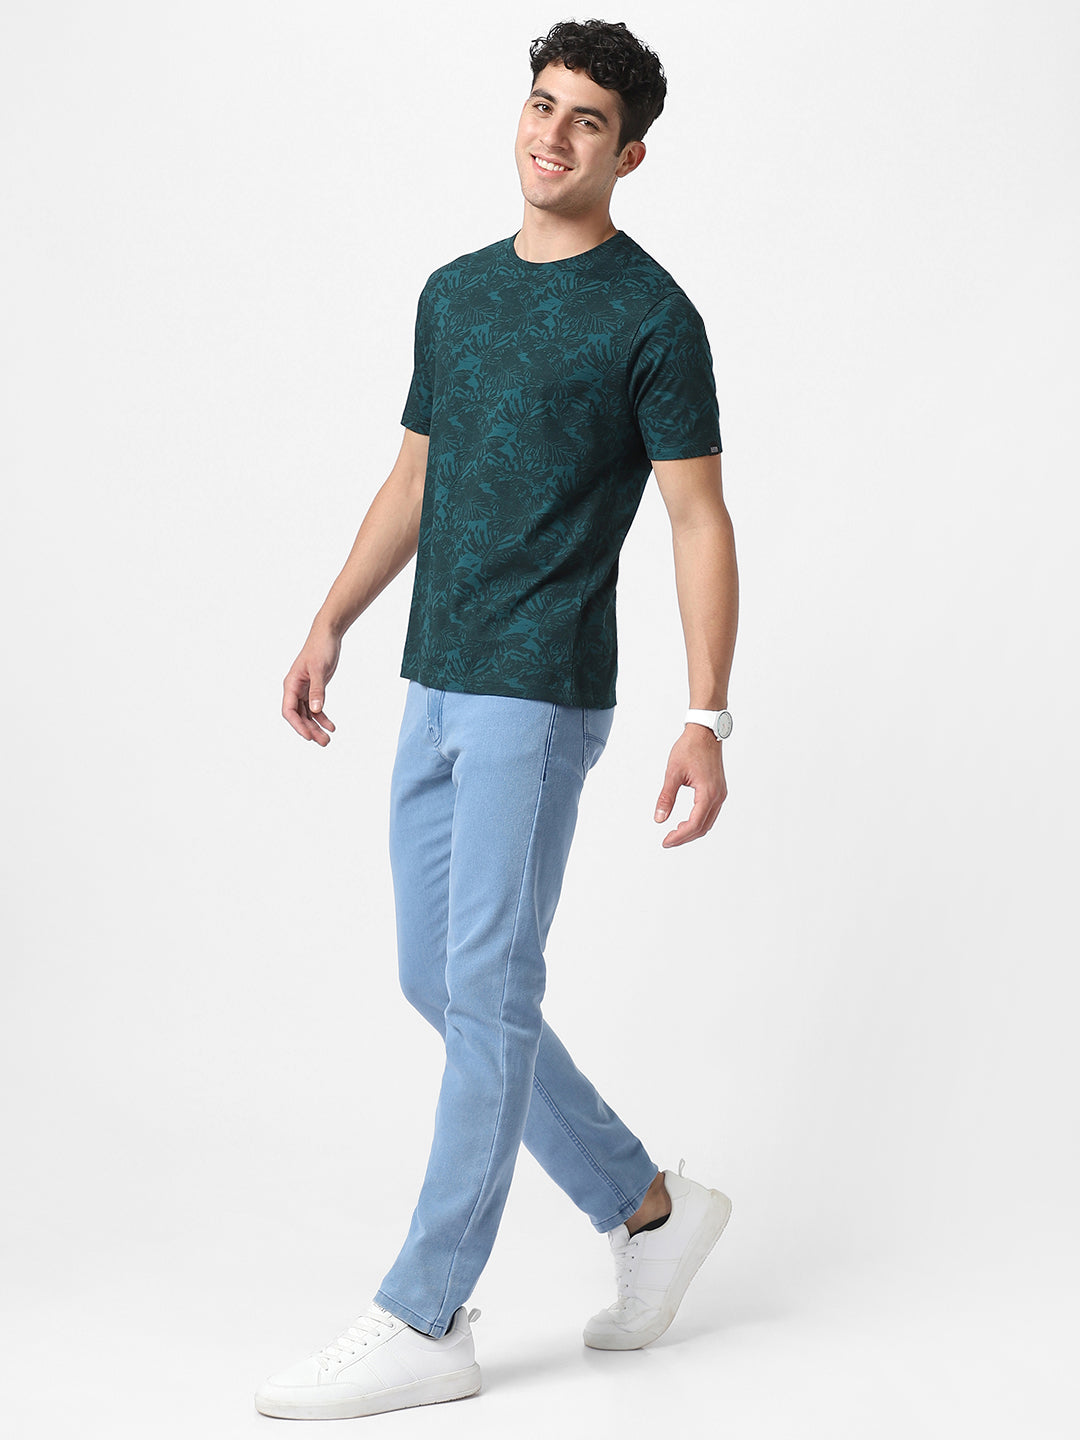 Men's Dark Green Printed Slim Fit Cotton Hal Sleeve T-Shirt